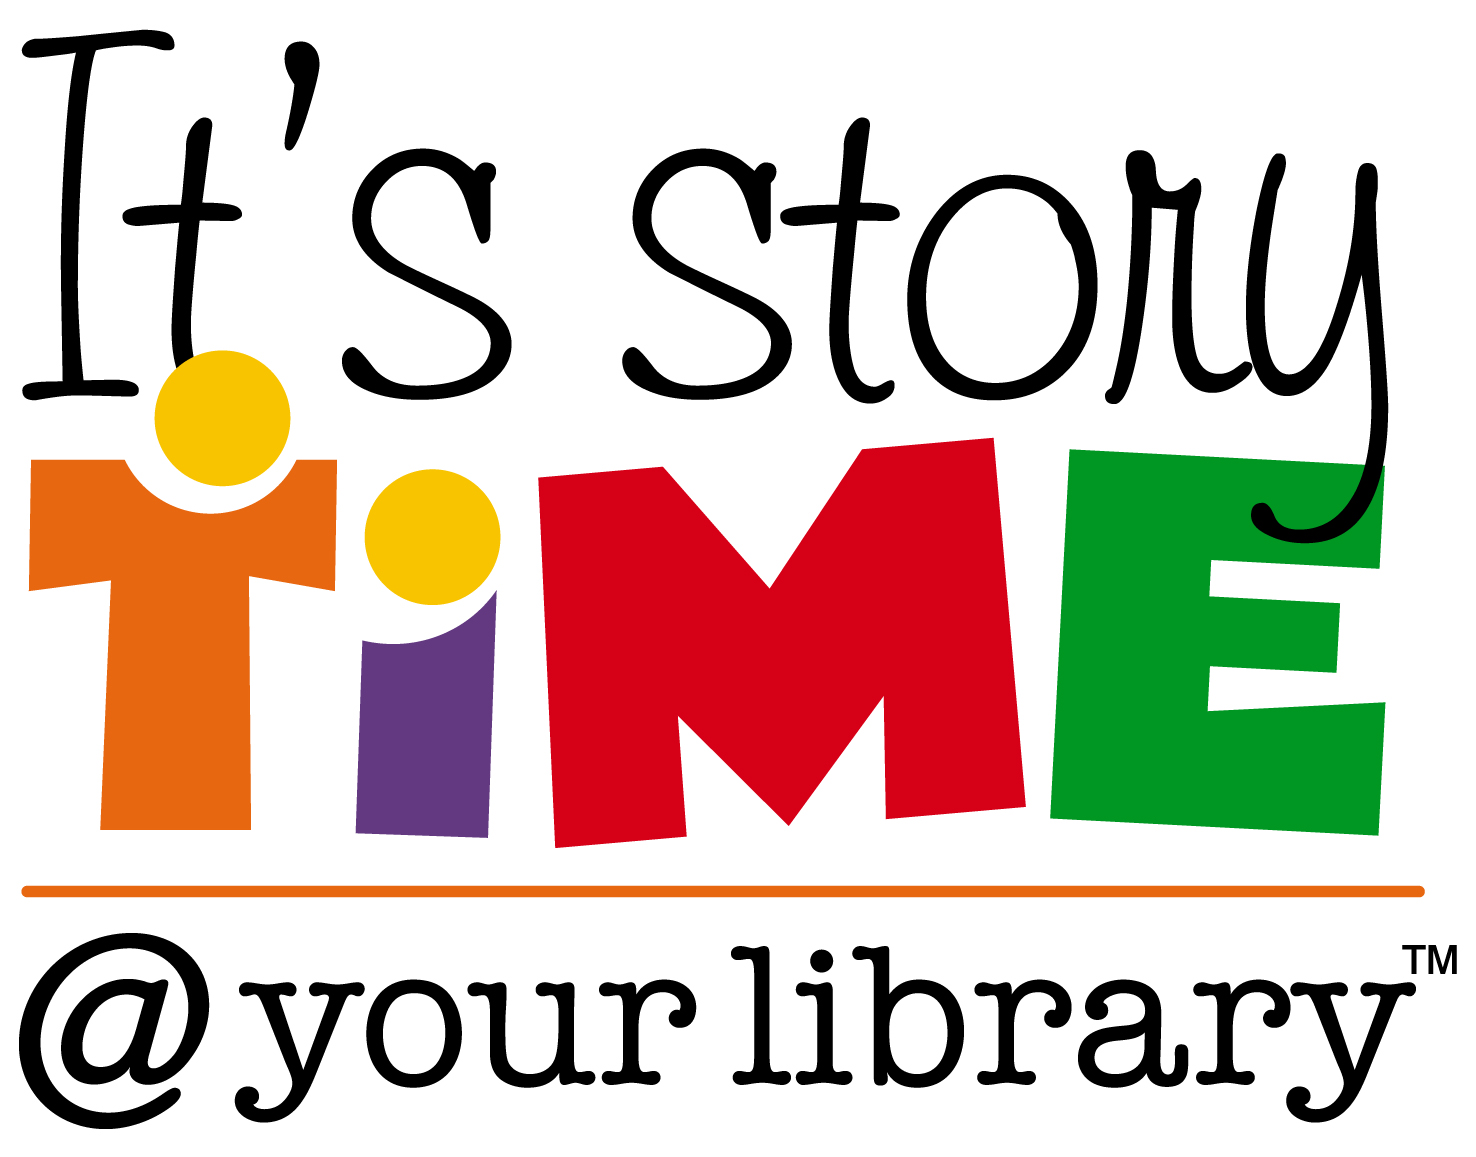 Preschool Story Time Clipart 